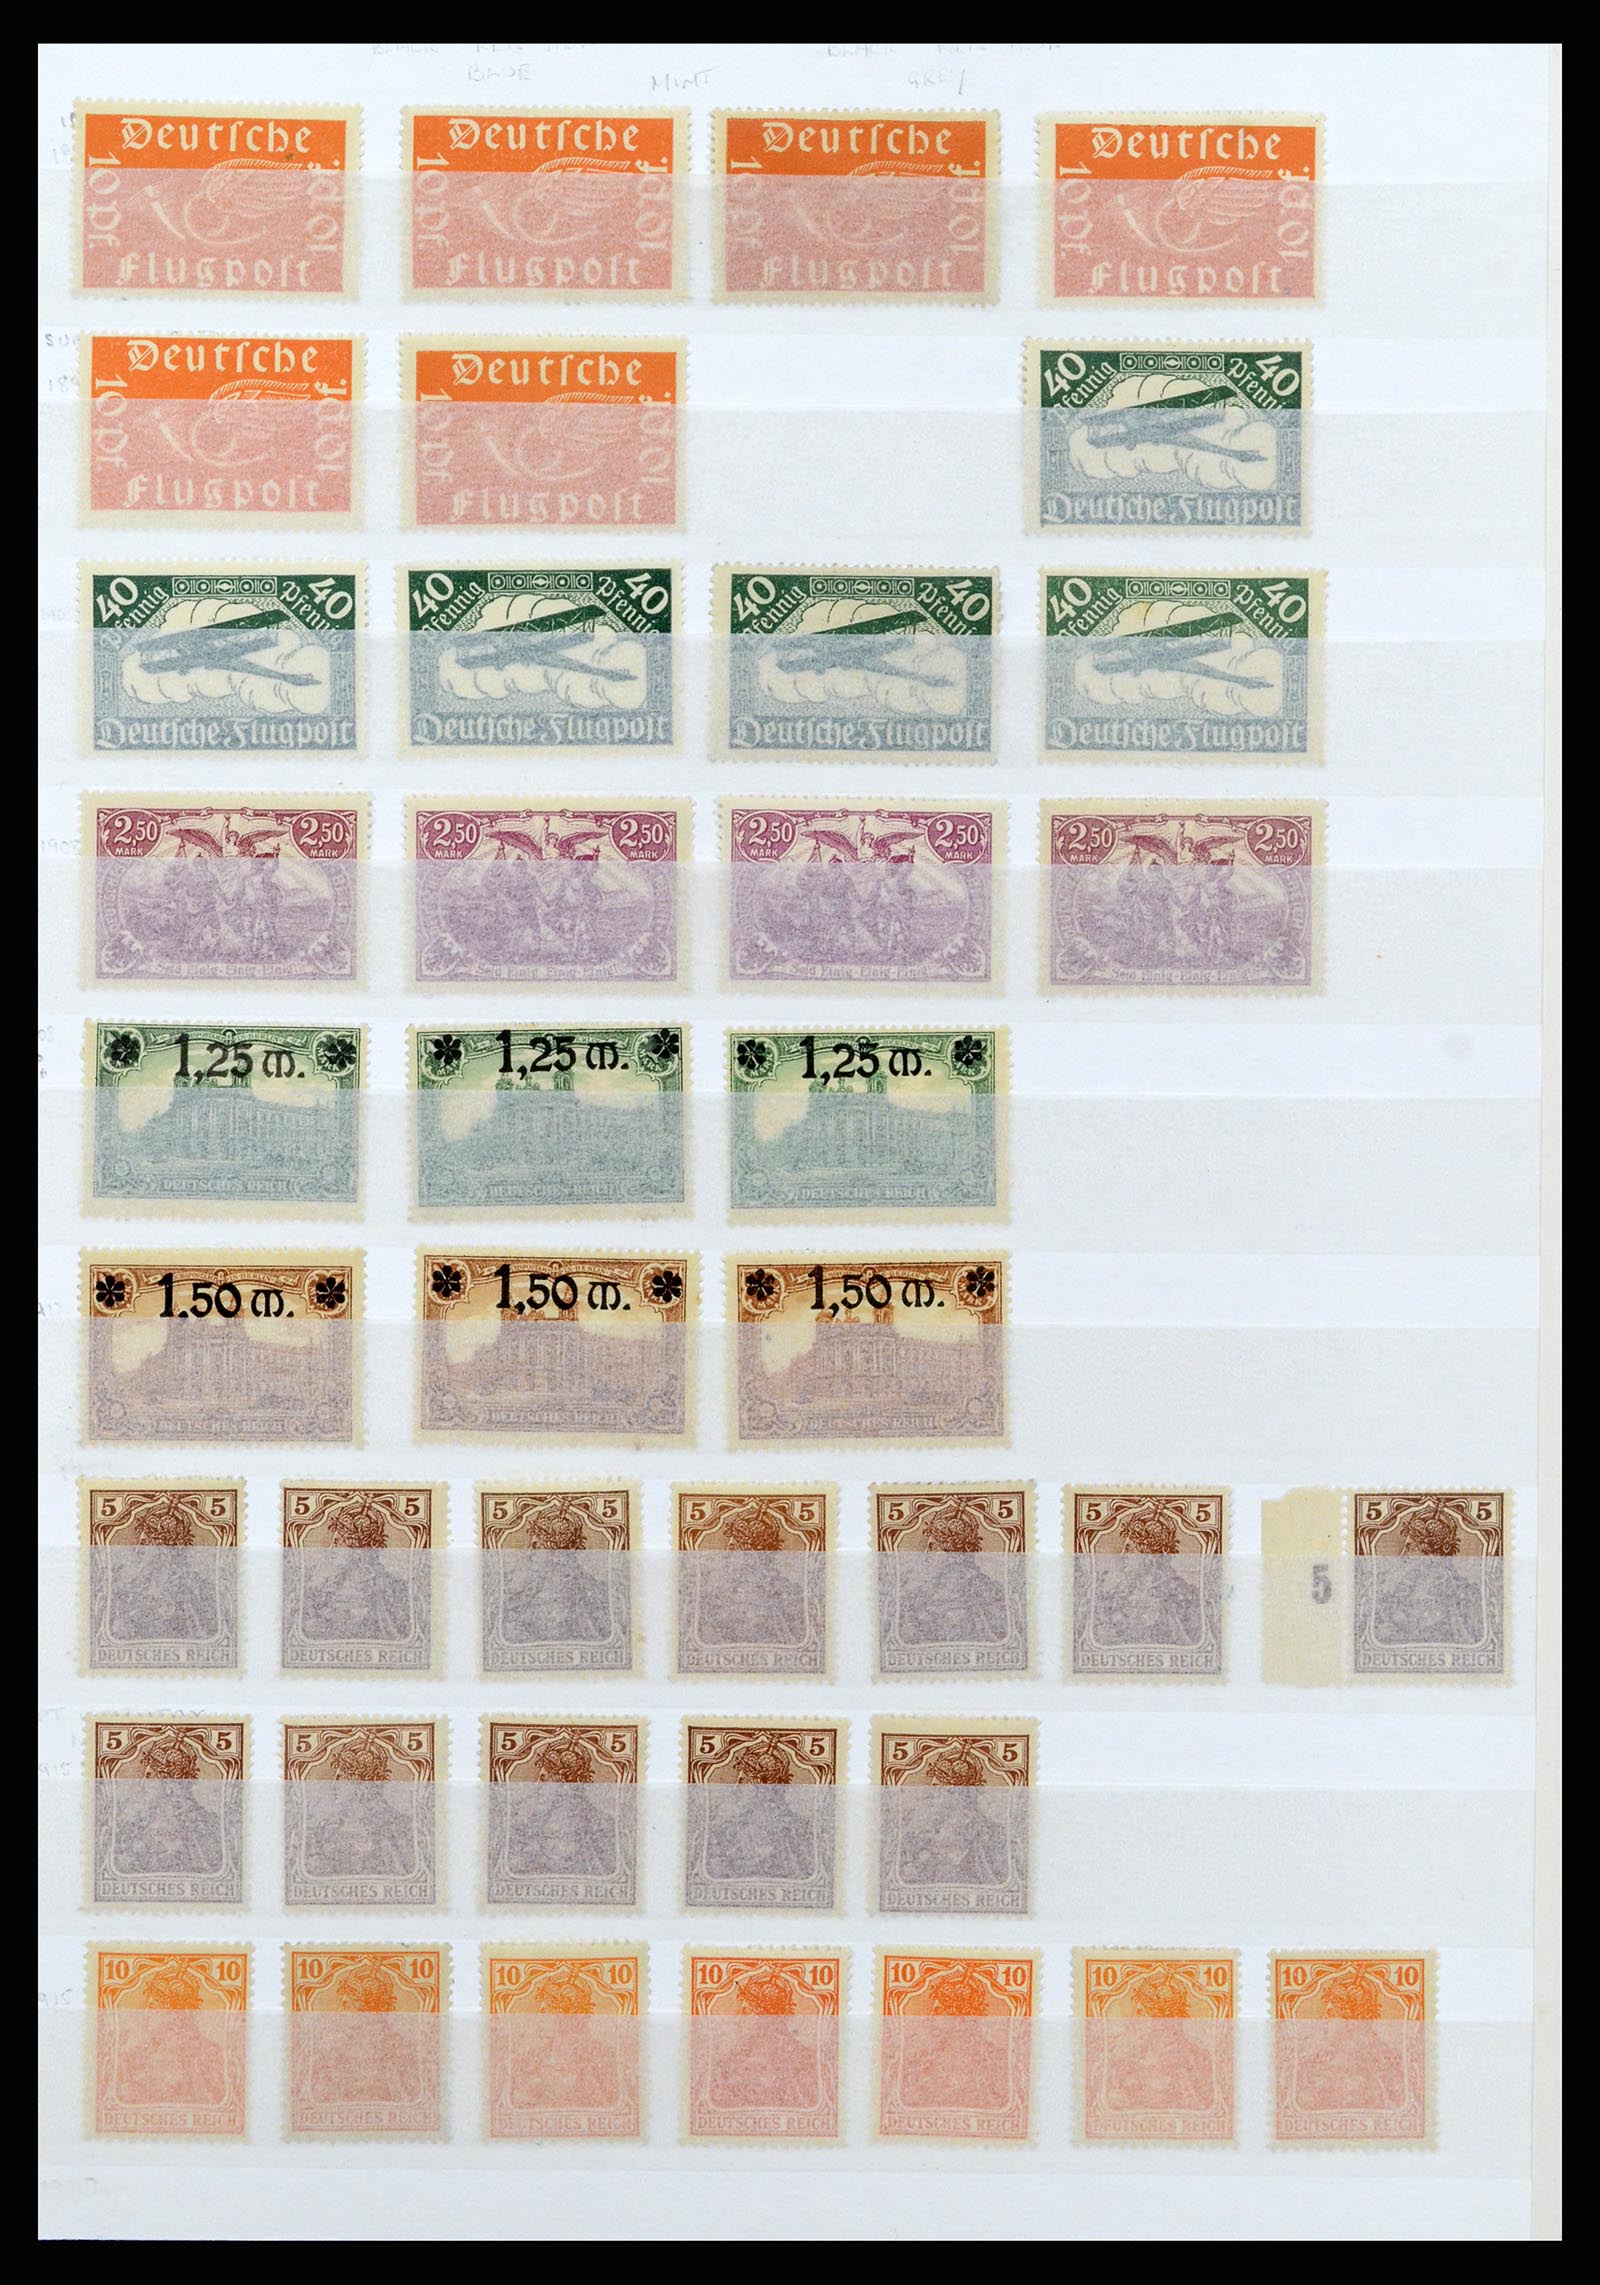 37103 003 - Stamp collection 37103 German Reich 1880-1945.